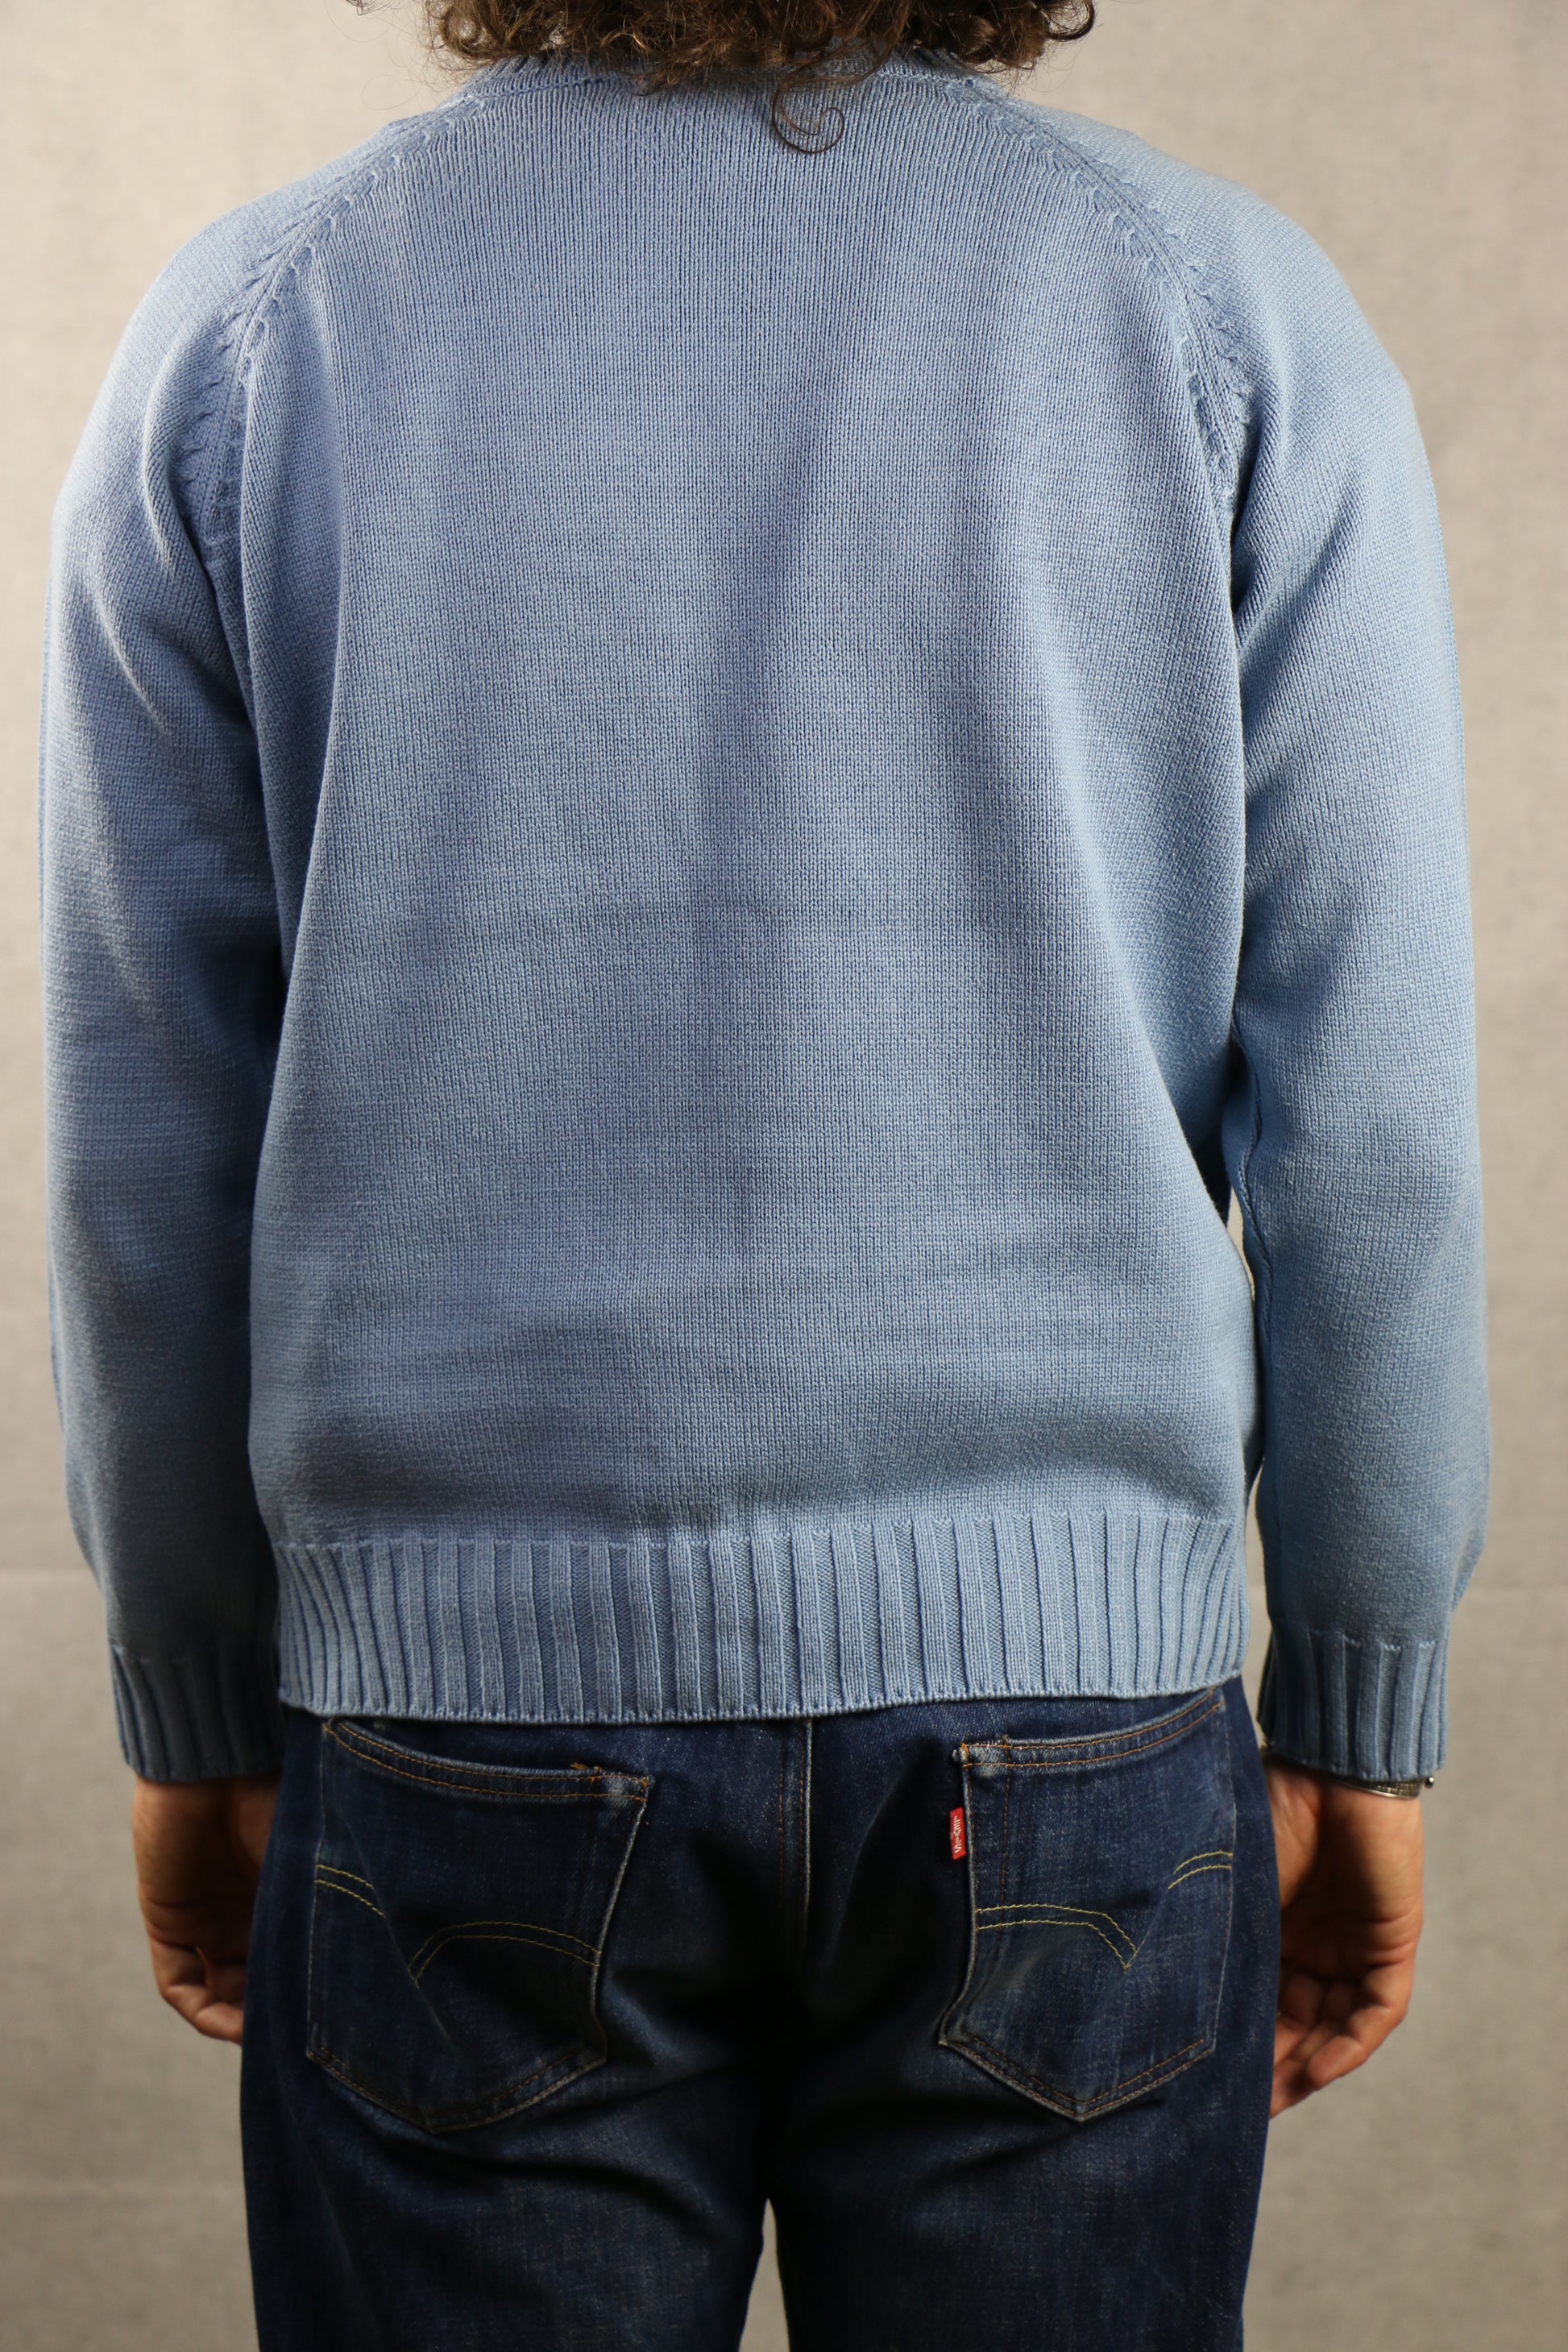 Ralph Lauren Sky Blue Sweater - vintage clothing clochard92.com